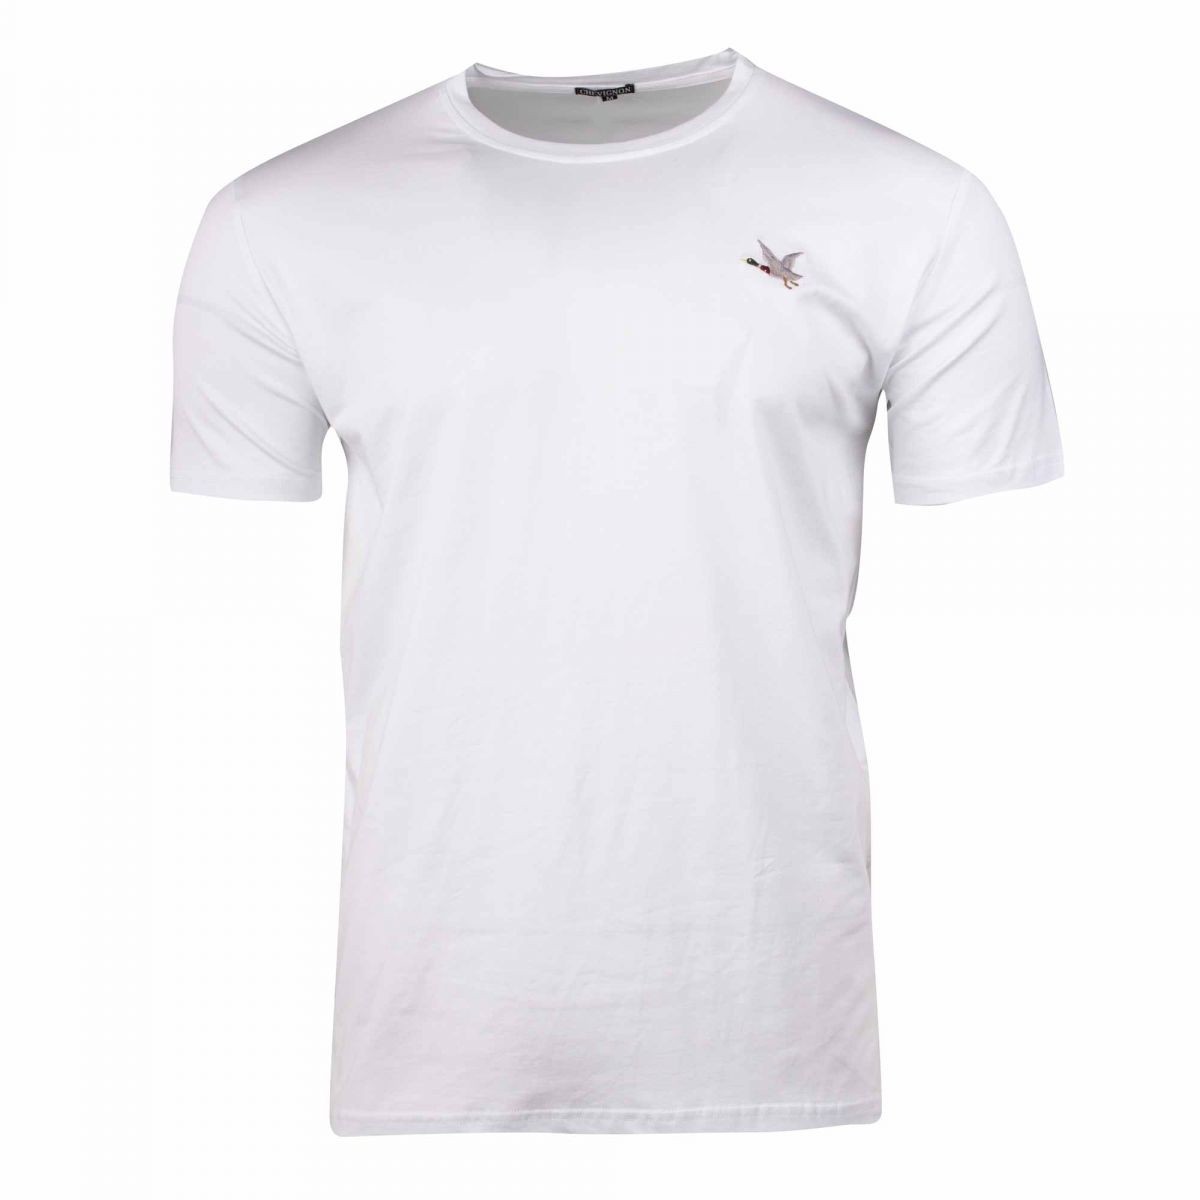 Tee-shirt homme CHEVIGNON blanc - Matière noble 14.90€